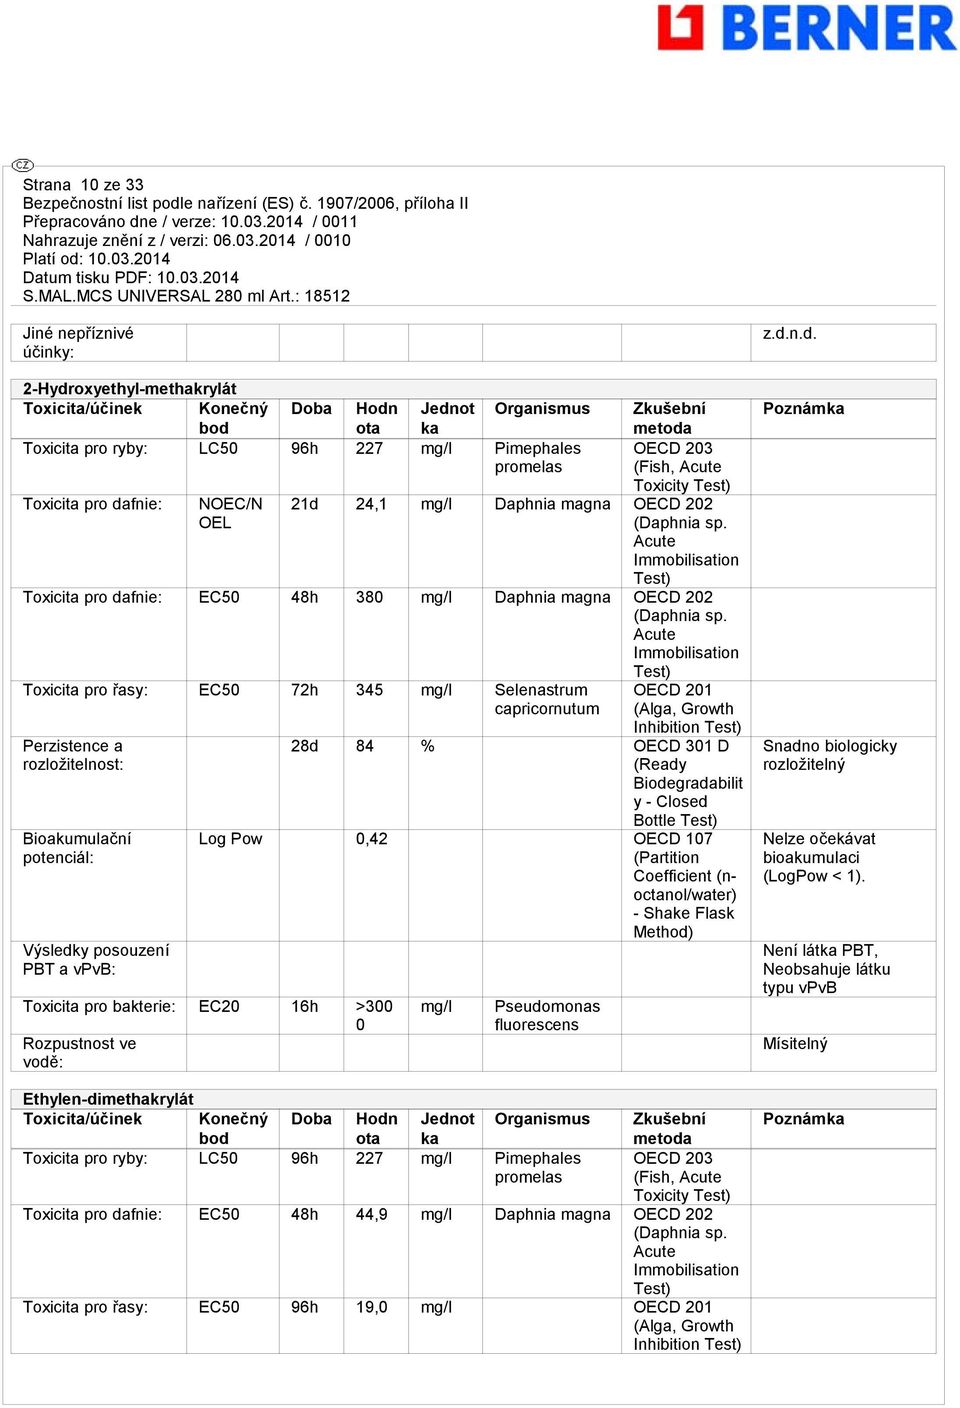 Acute Immobilisation Test) Toxicita pro dafnie: EC50 48h 380 mg/l Daphnia magna OECD 202 (Daphnia sp.